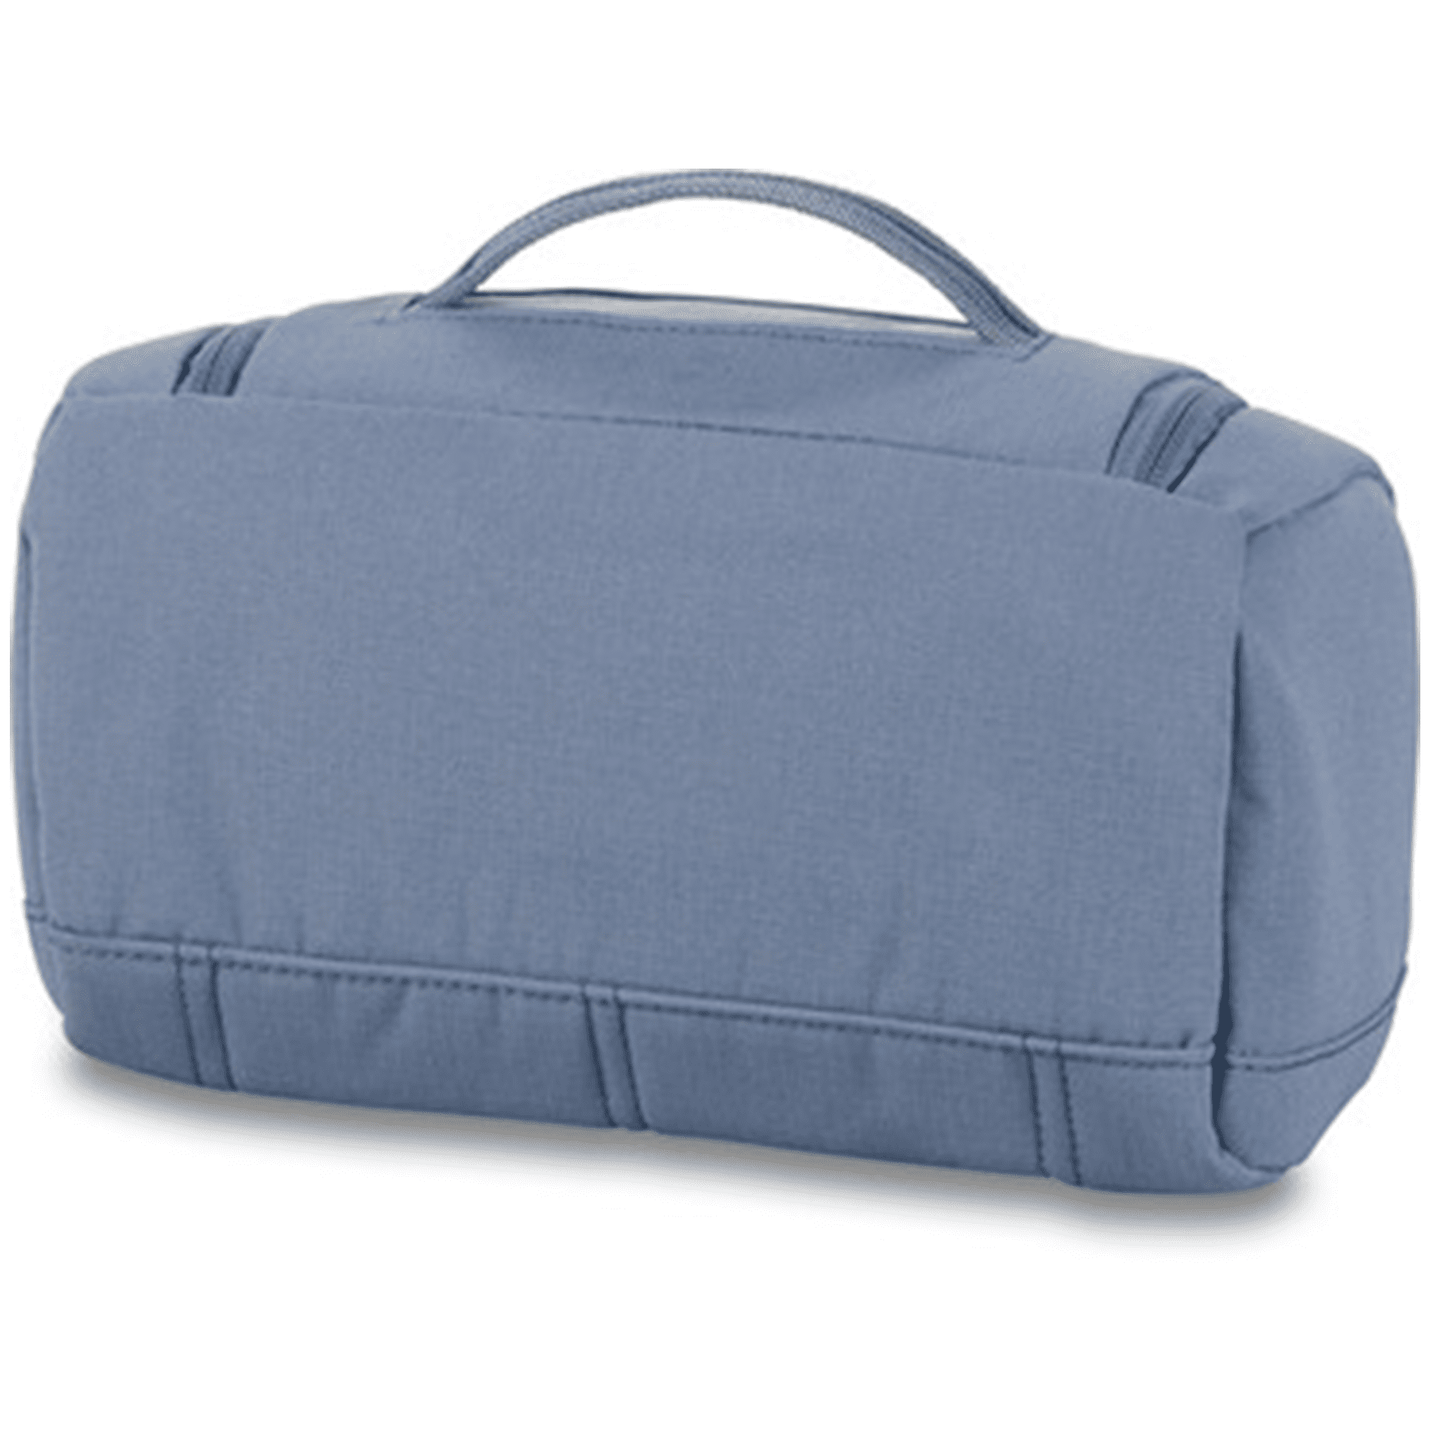 Dakine Revival Kit Bag Medium - Vintage Blue